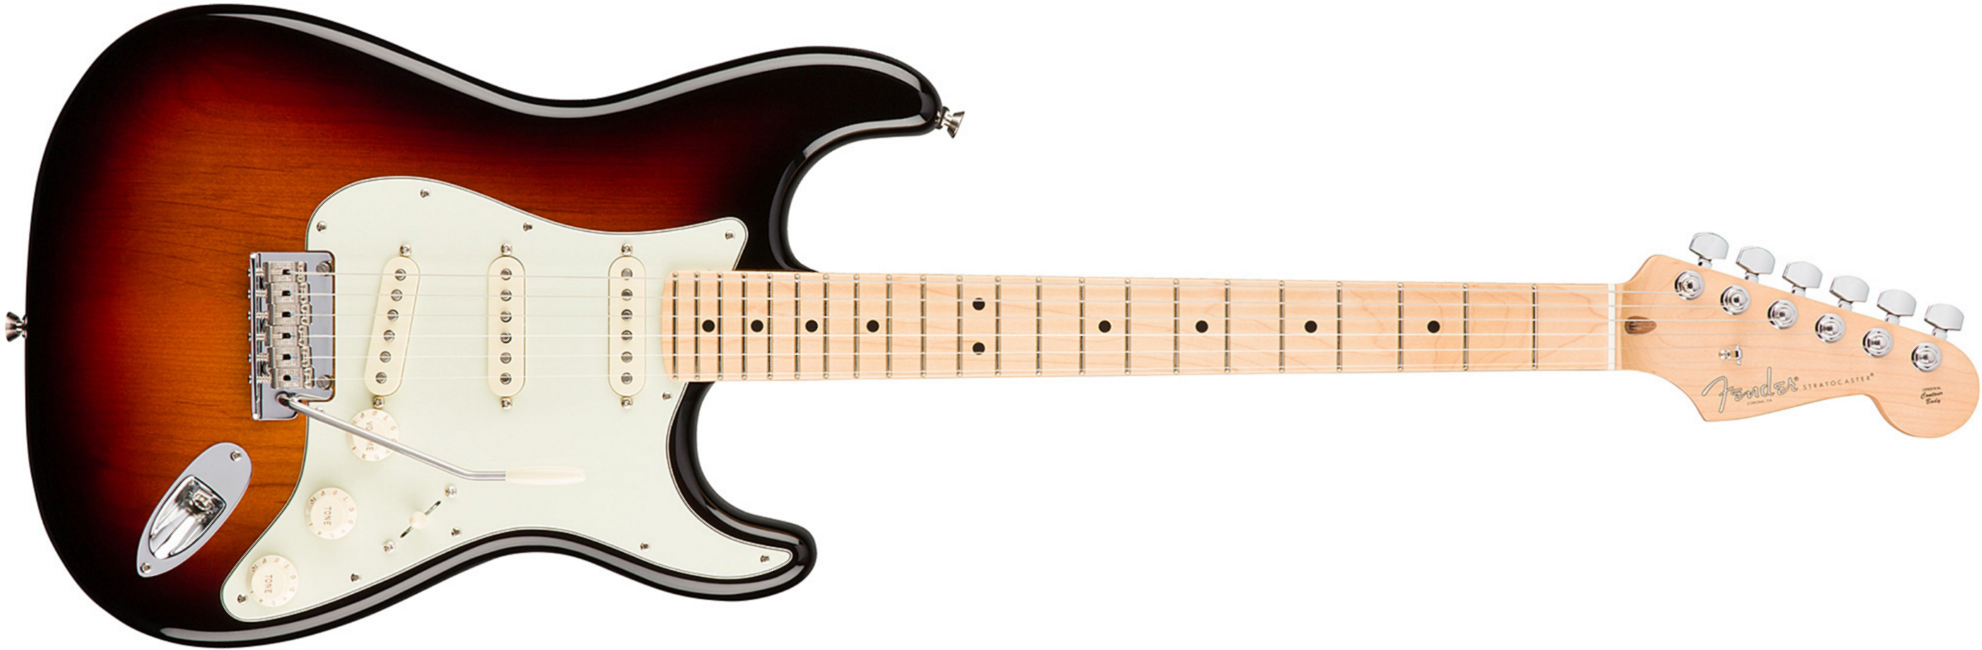 Fender Strat American Professional 2017 3s Usa Mn - 3-color Sunburst - Str shape electric guitar - Main picture